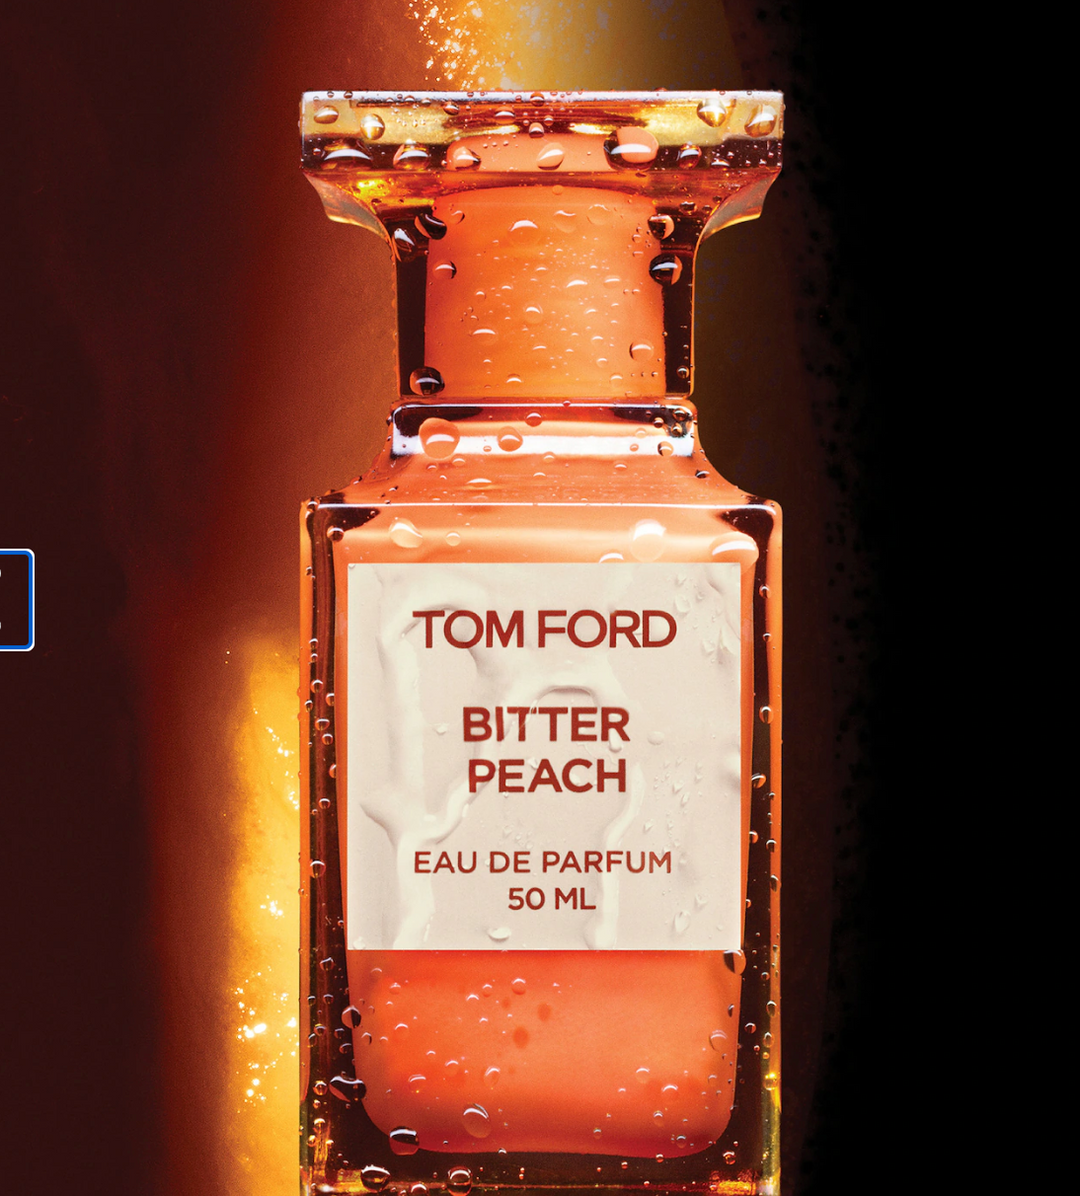 Tom Ford Private Blend Bitter Peach Eau de Parfum